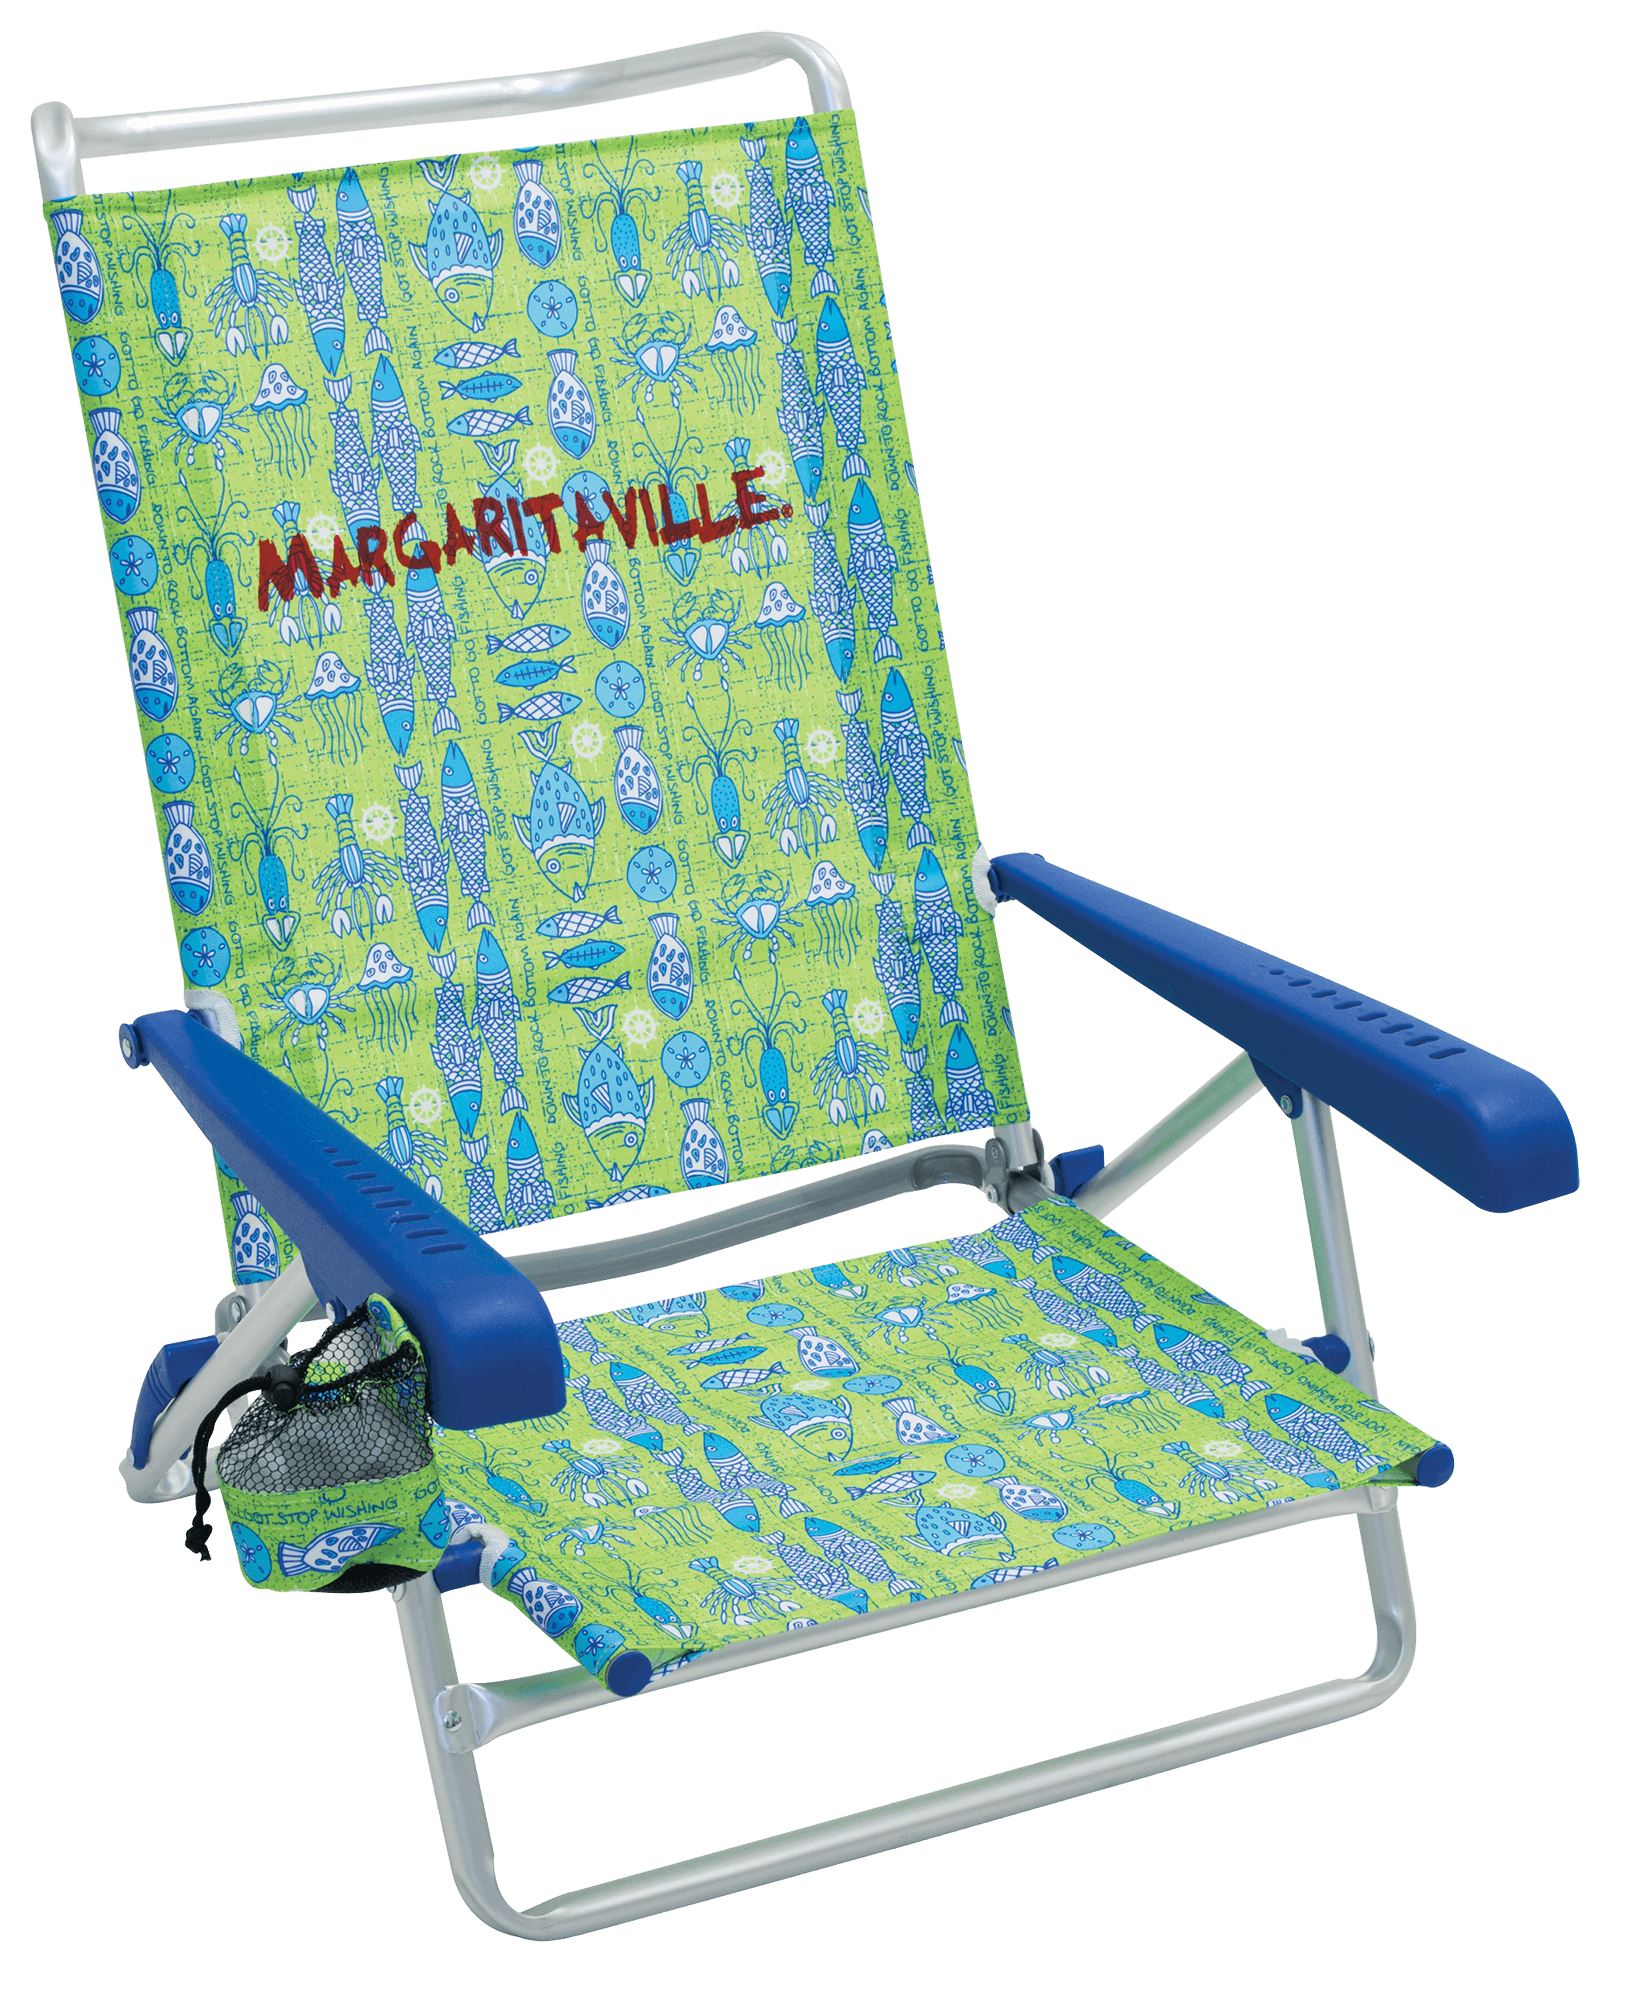 Margaritaville 5 Position Aluminum Beach Chair - Green - image 1 of 2